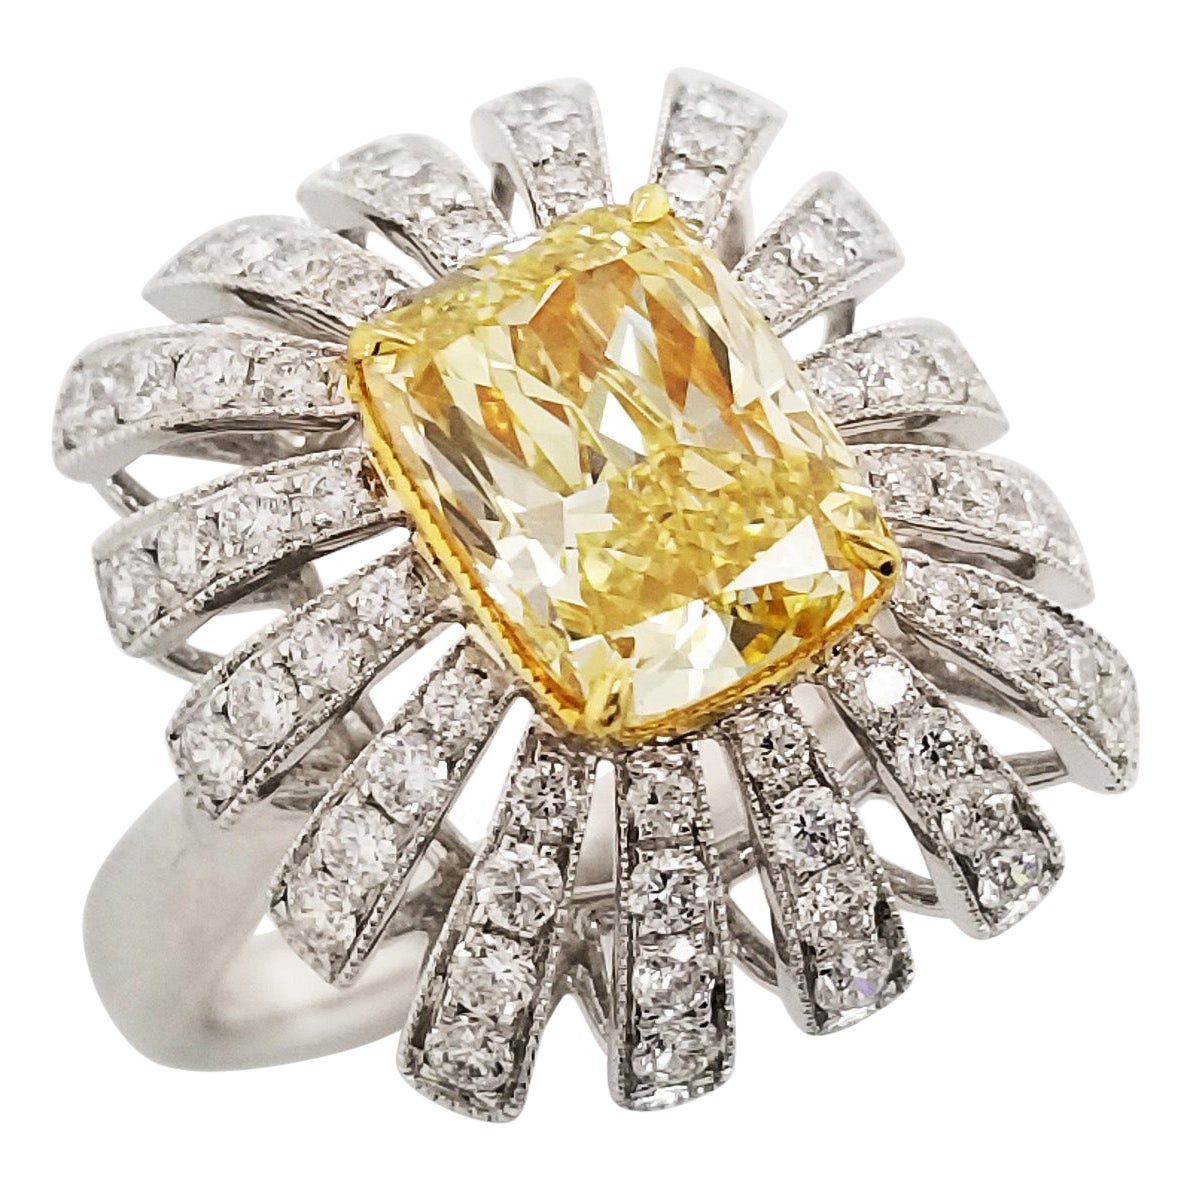 Scarselli 2.34 Carat Fancy Intense Yellow Cushion Diamond GIA Engagement Ring 